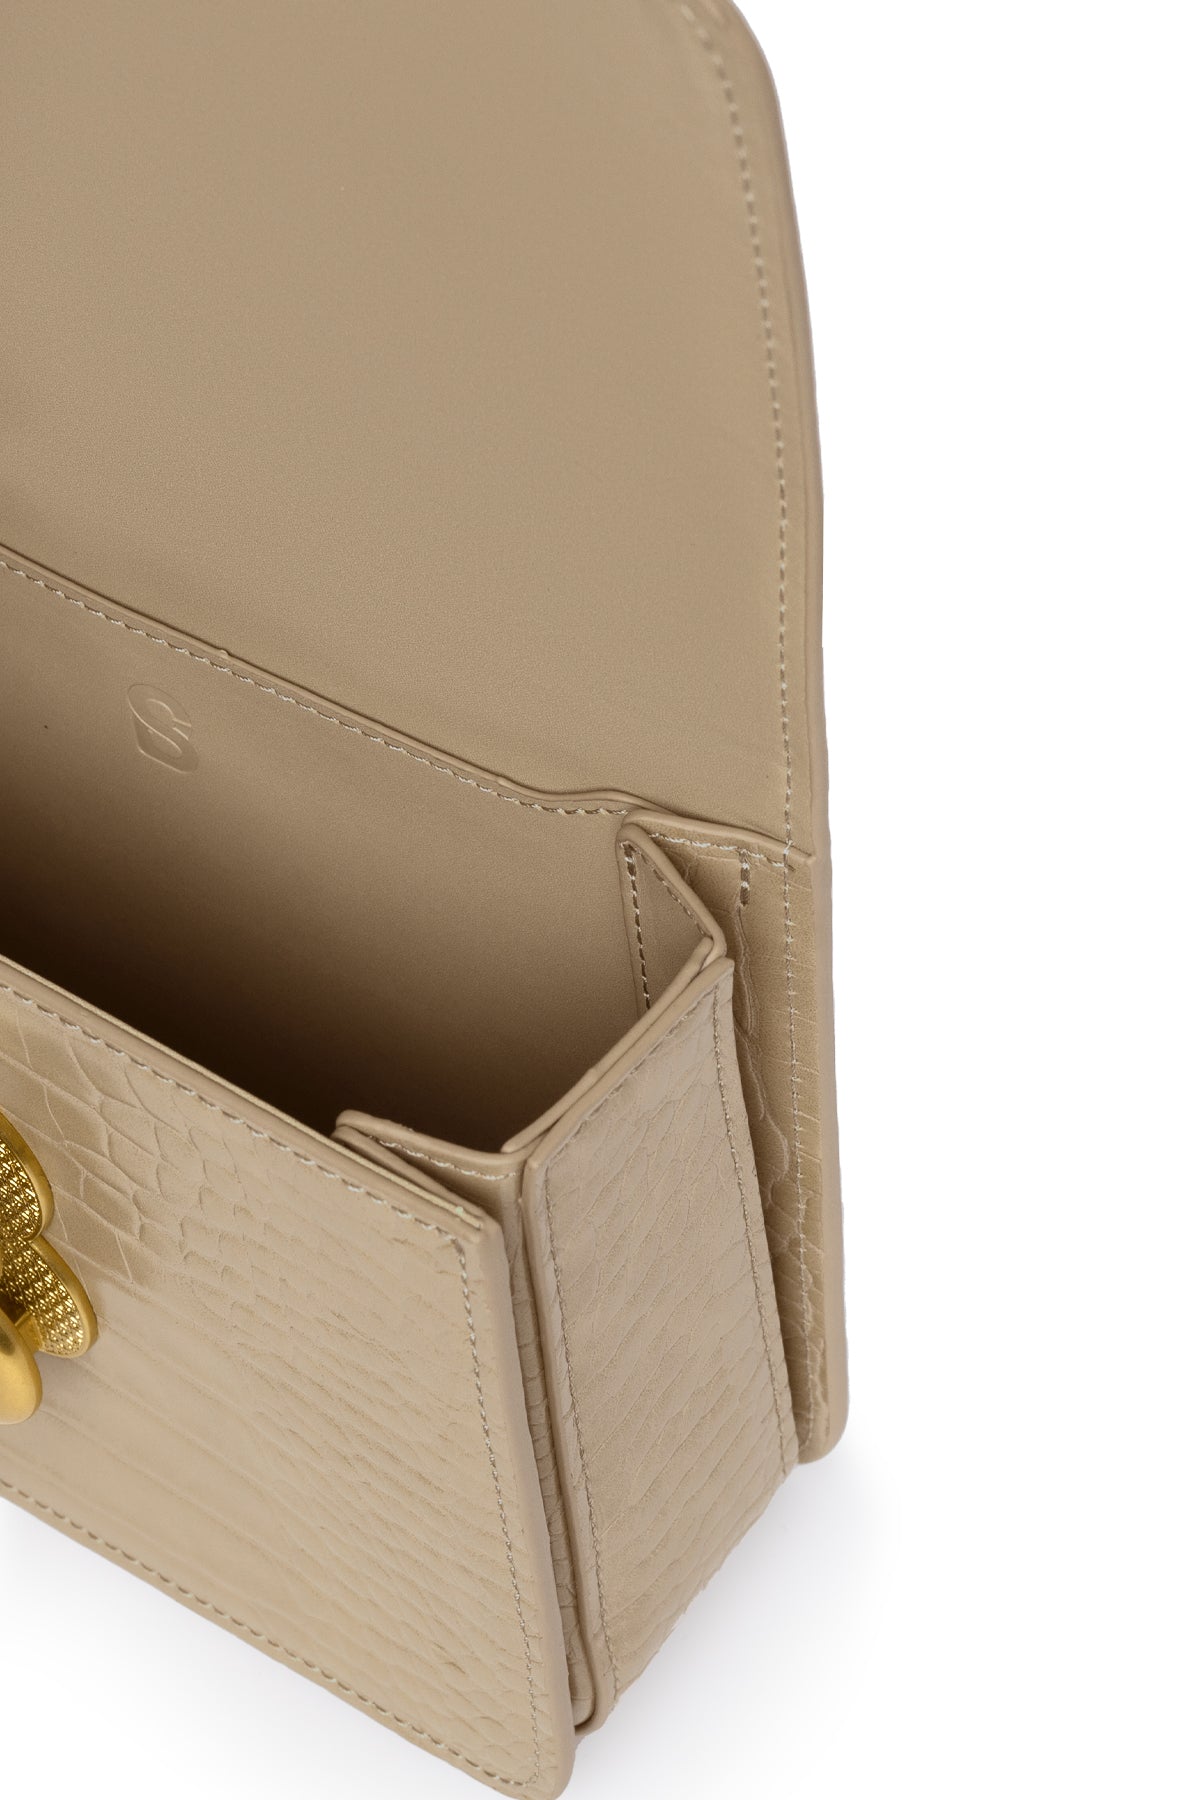 Shop Buttonscarves accessories The Audrey Monogram Bag Small - Black Bag